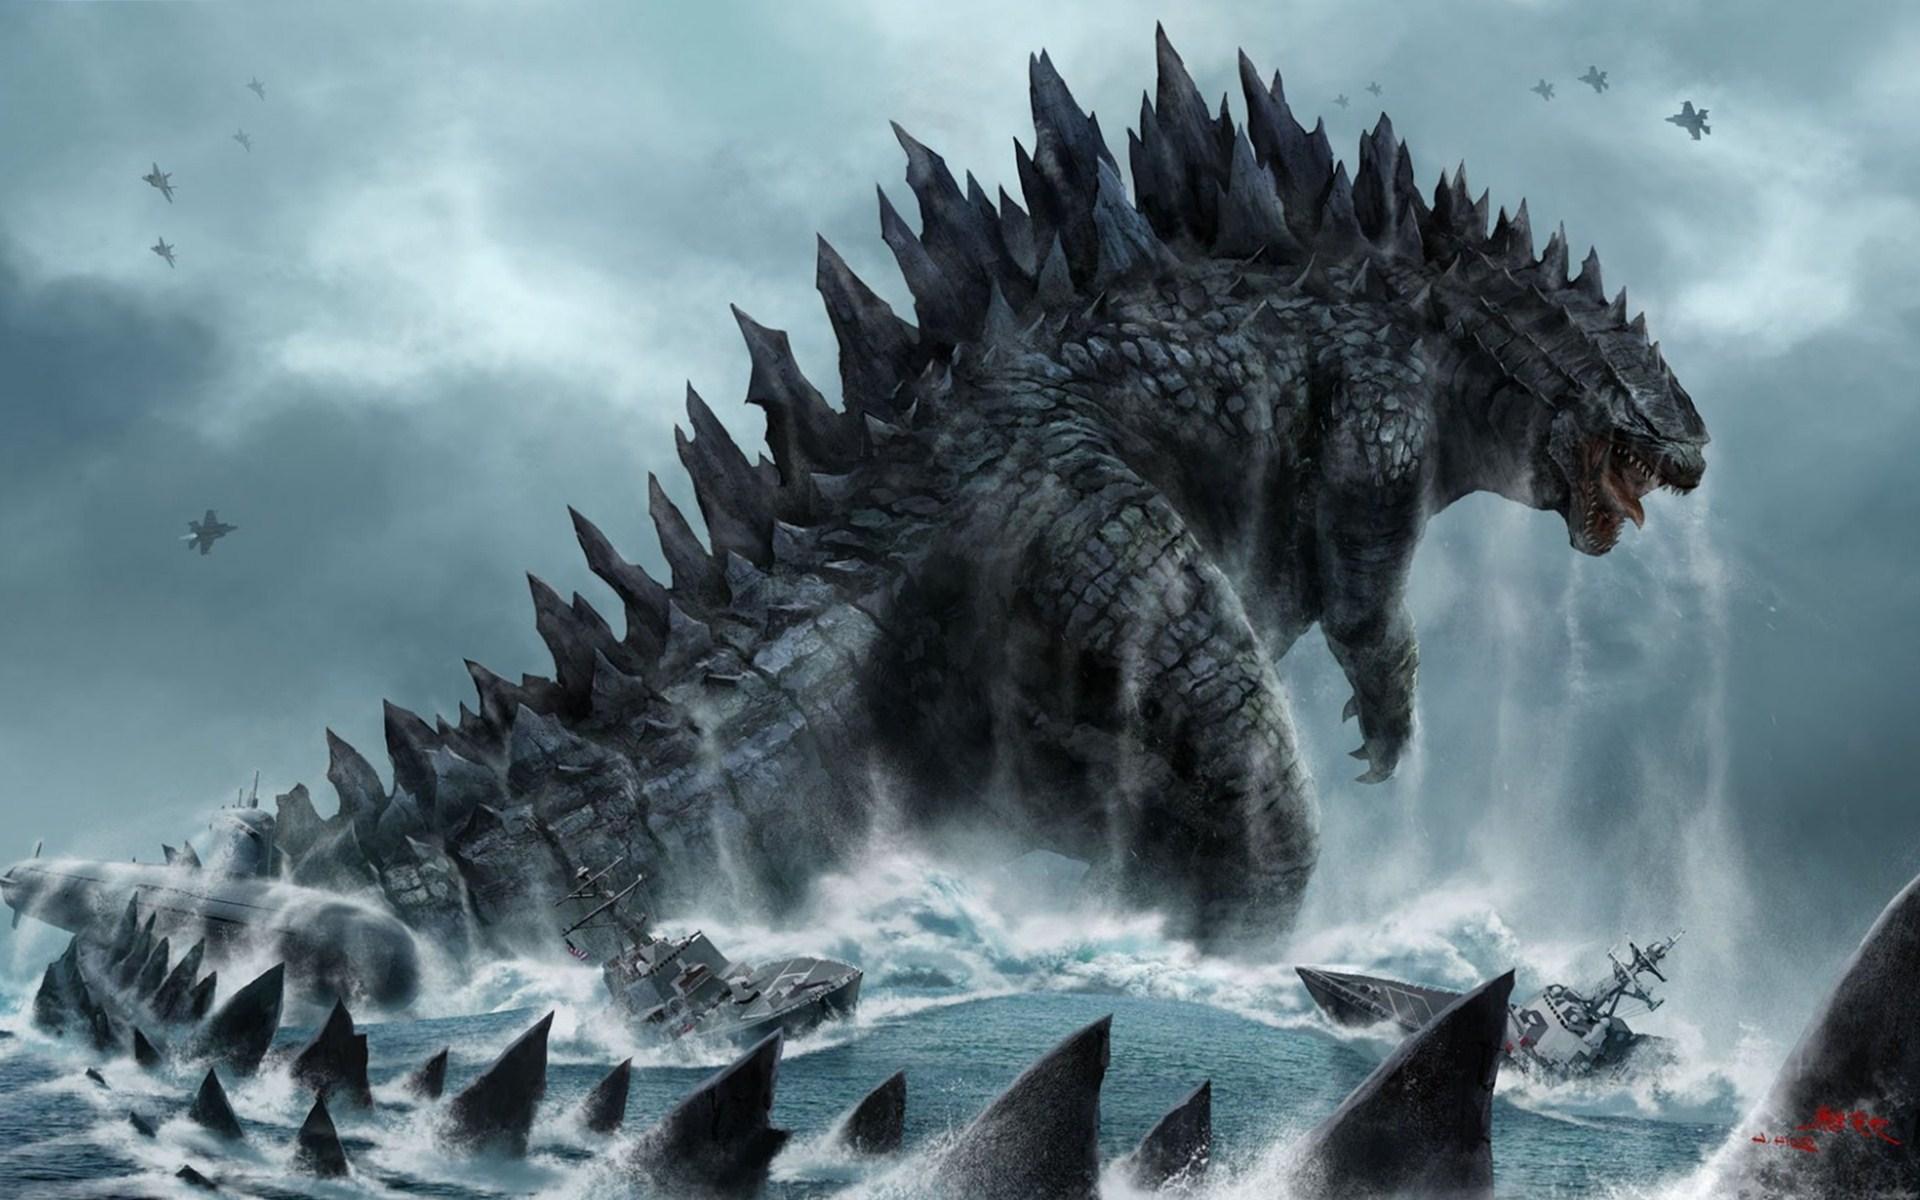 The next Godzilla flick starts production